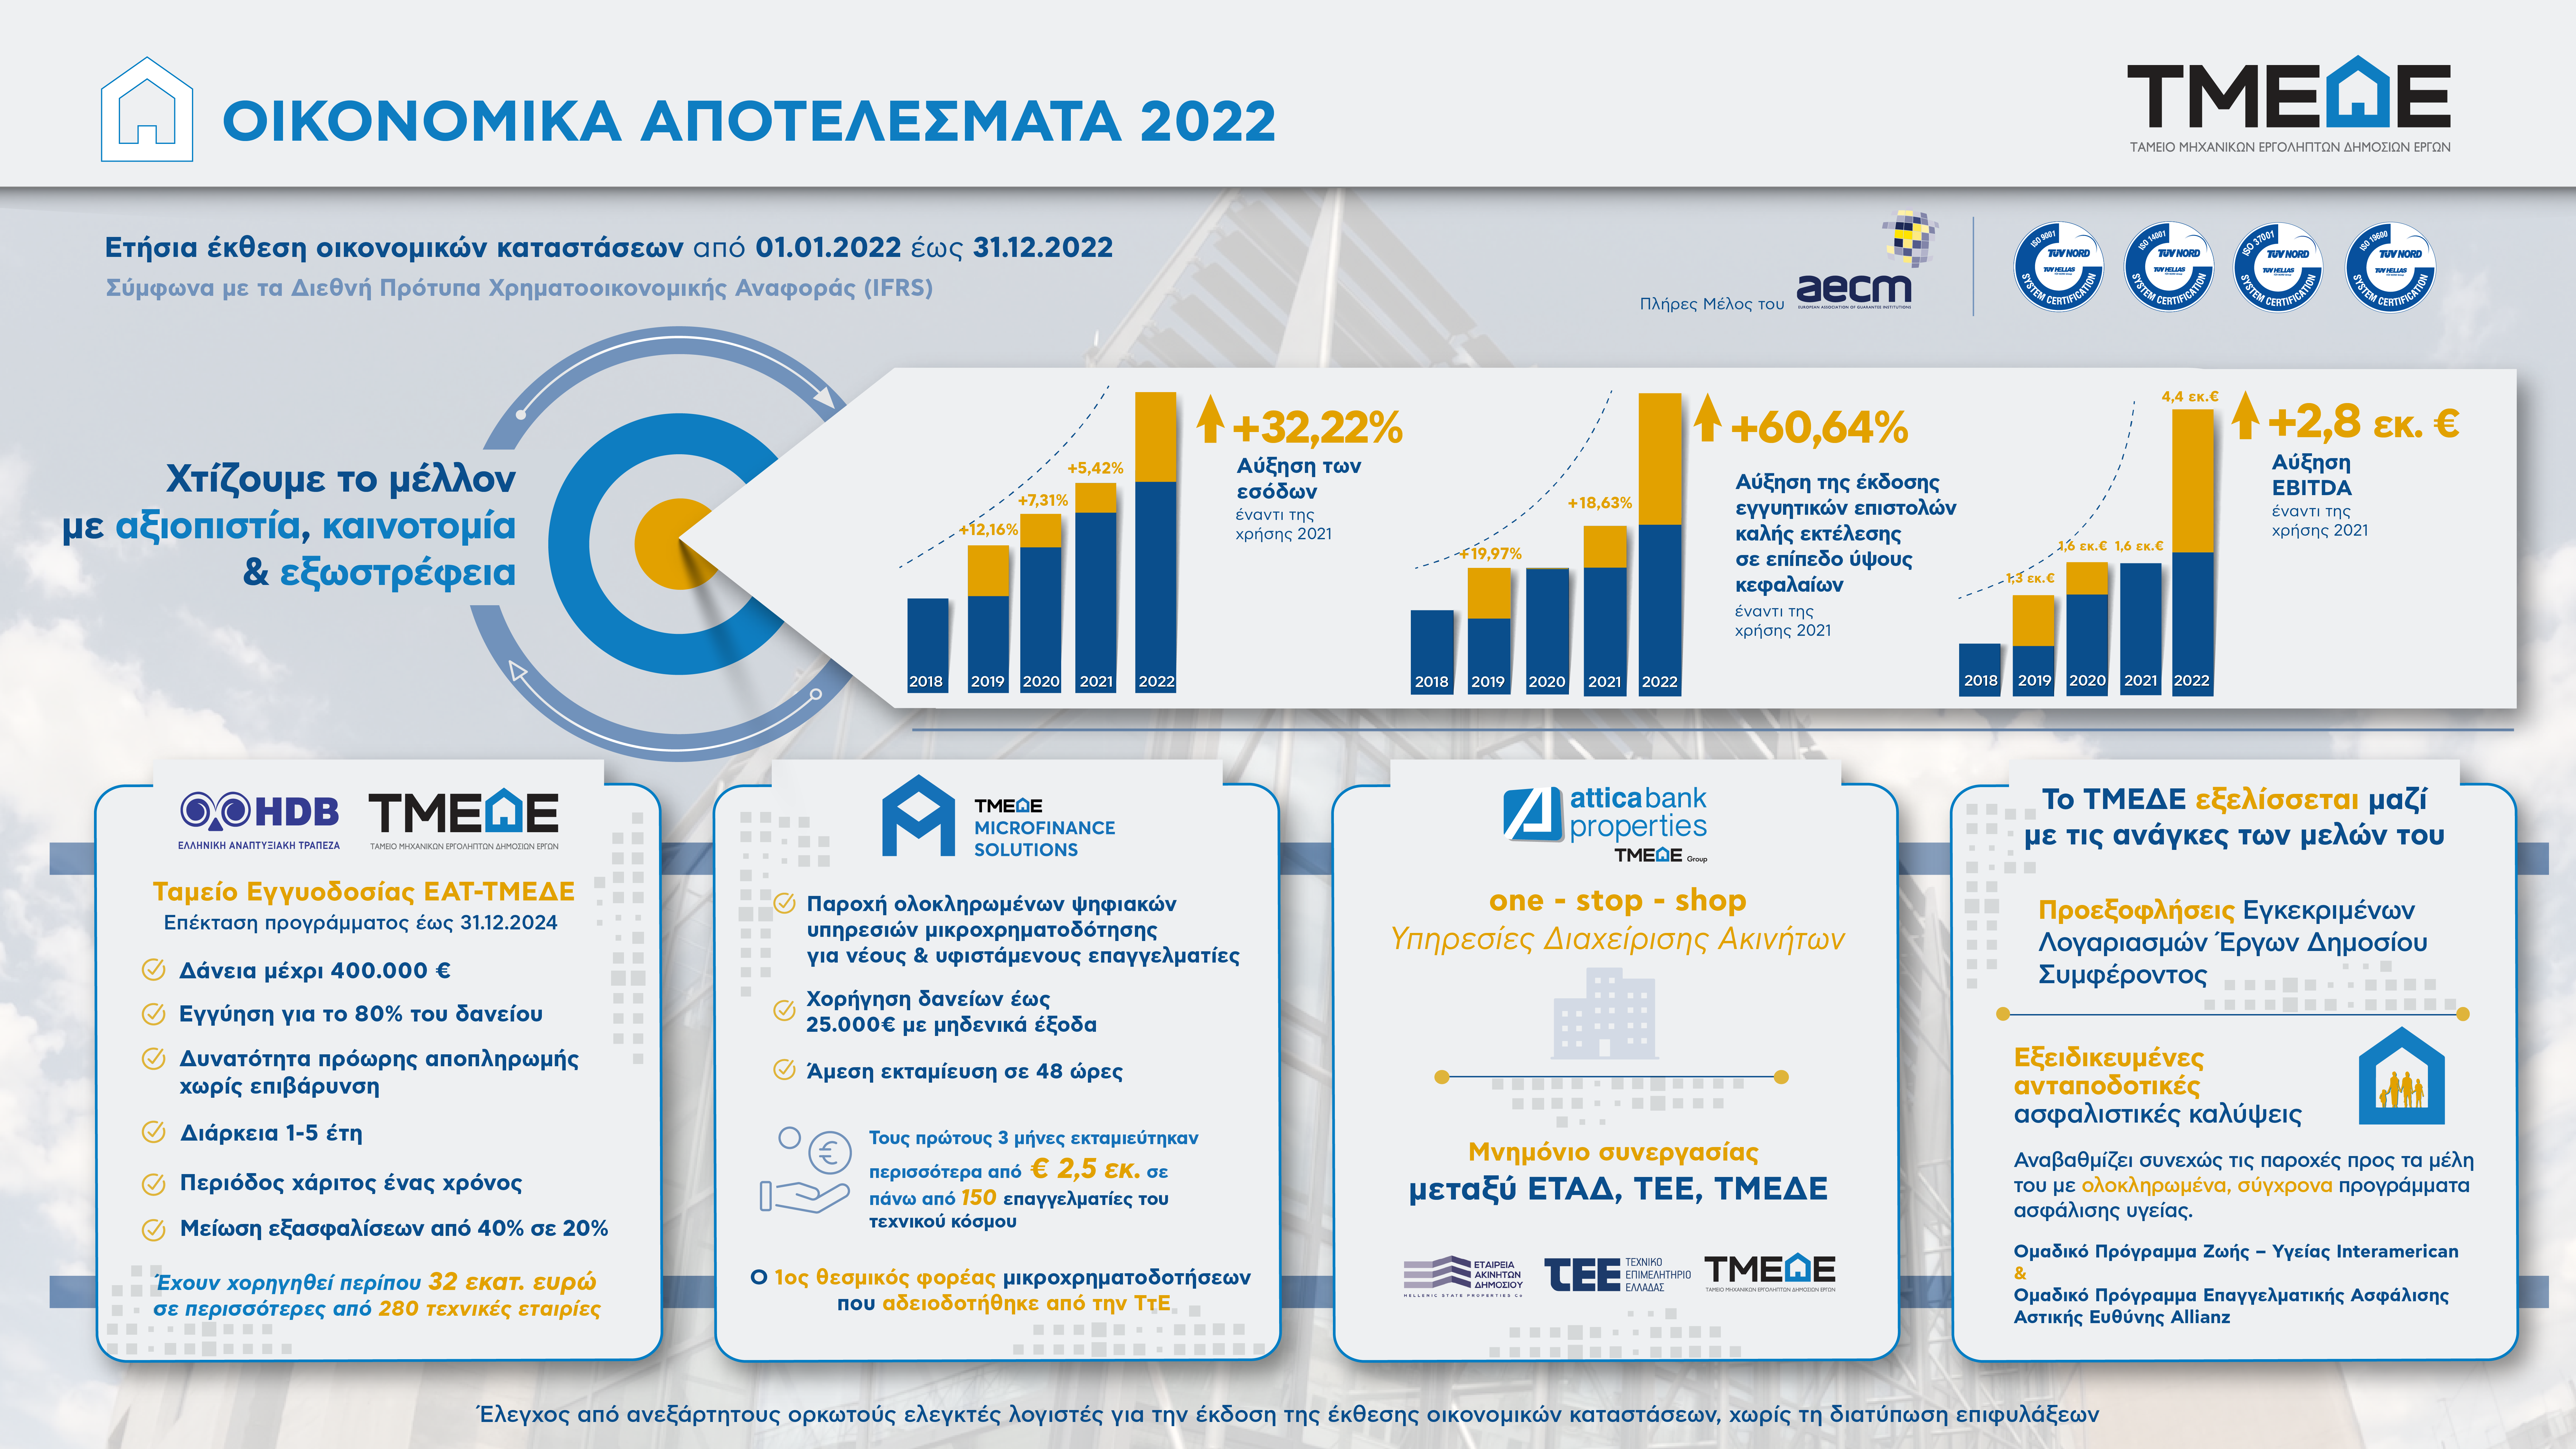 TMEDE Οικονομικά αποτελέσματα 2022 Infographic